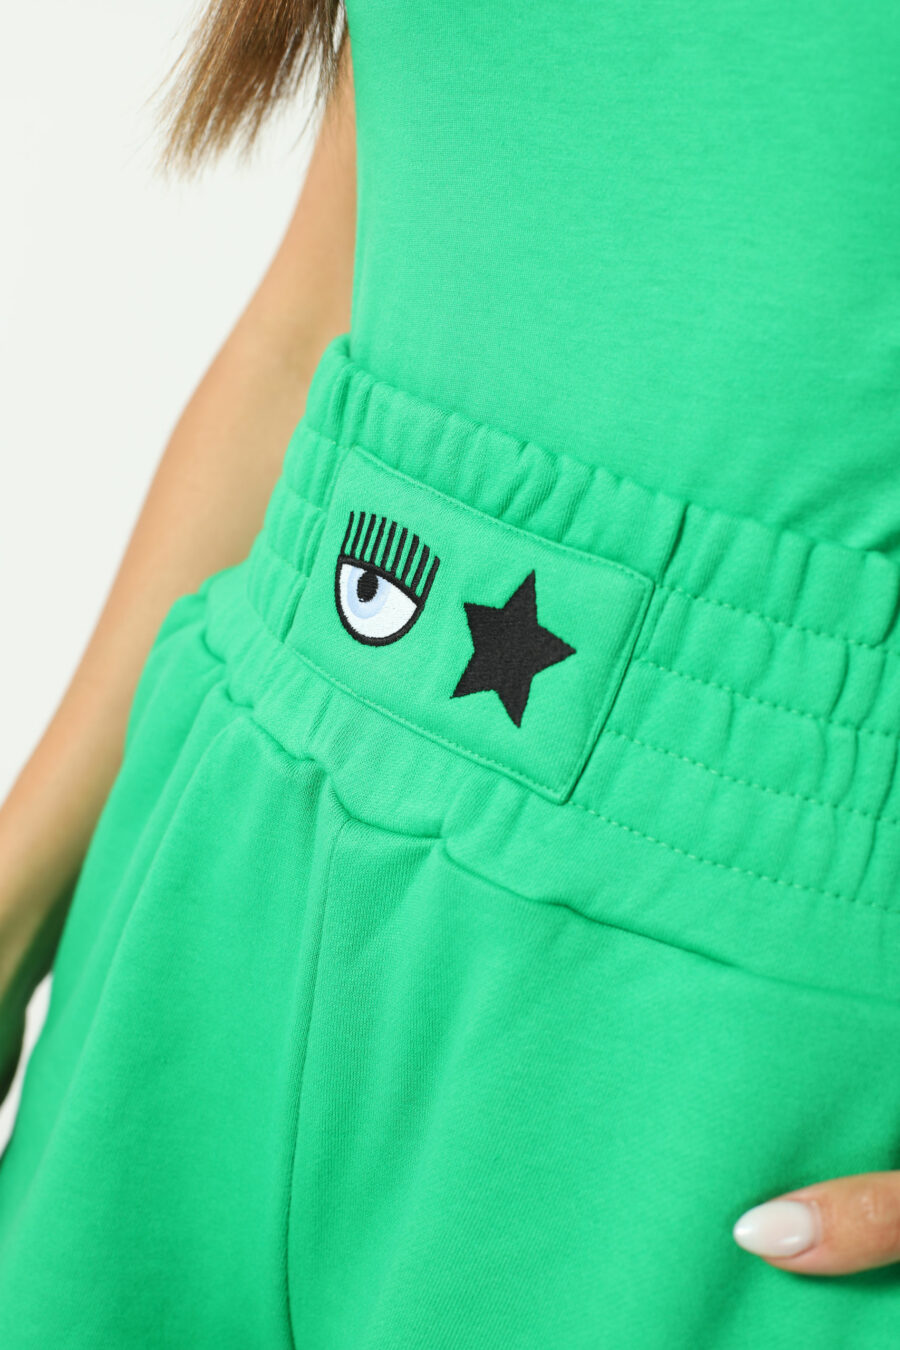 Pantalón de chándal verde corto con logo ojo y estrella - Photos 2581